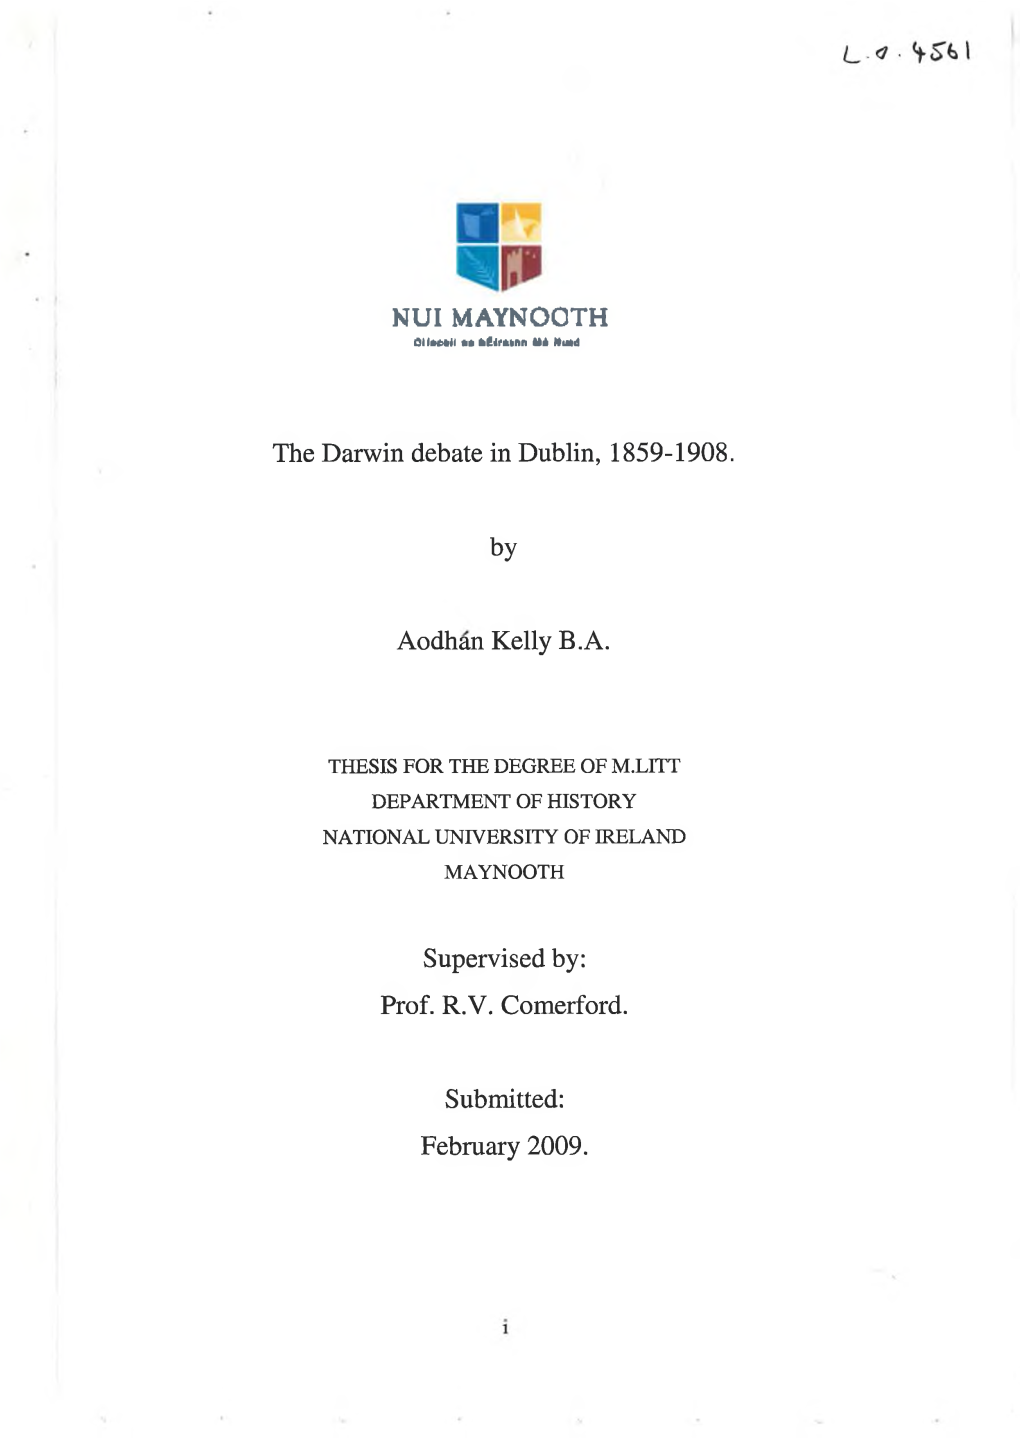 The Darwin Debate in Dublin, 1859-1908. by Aodhan Kelly B.A